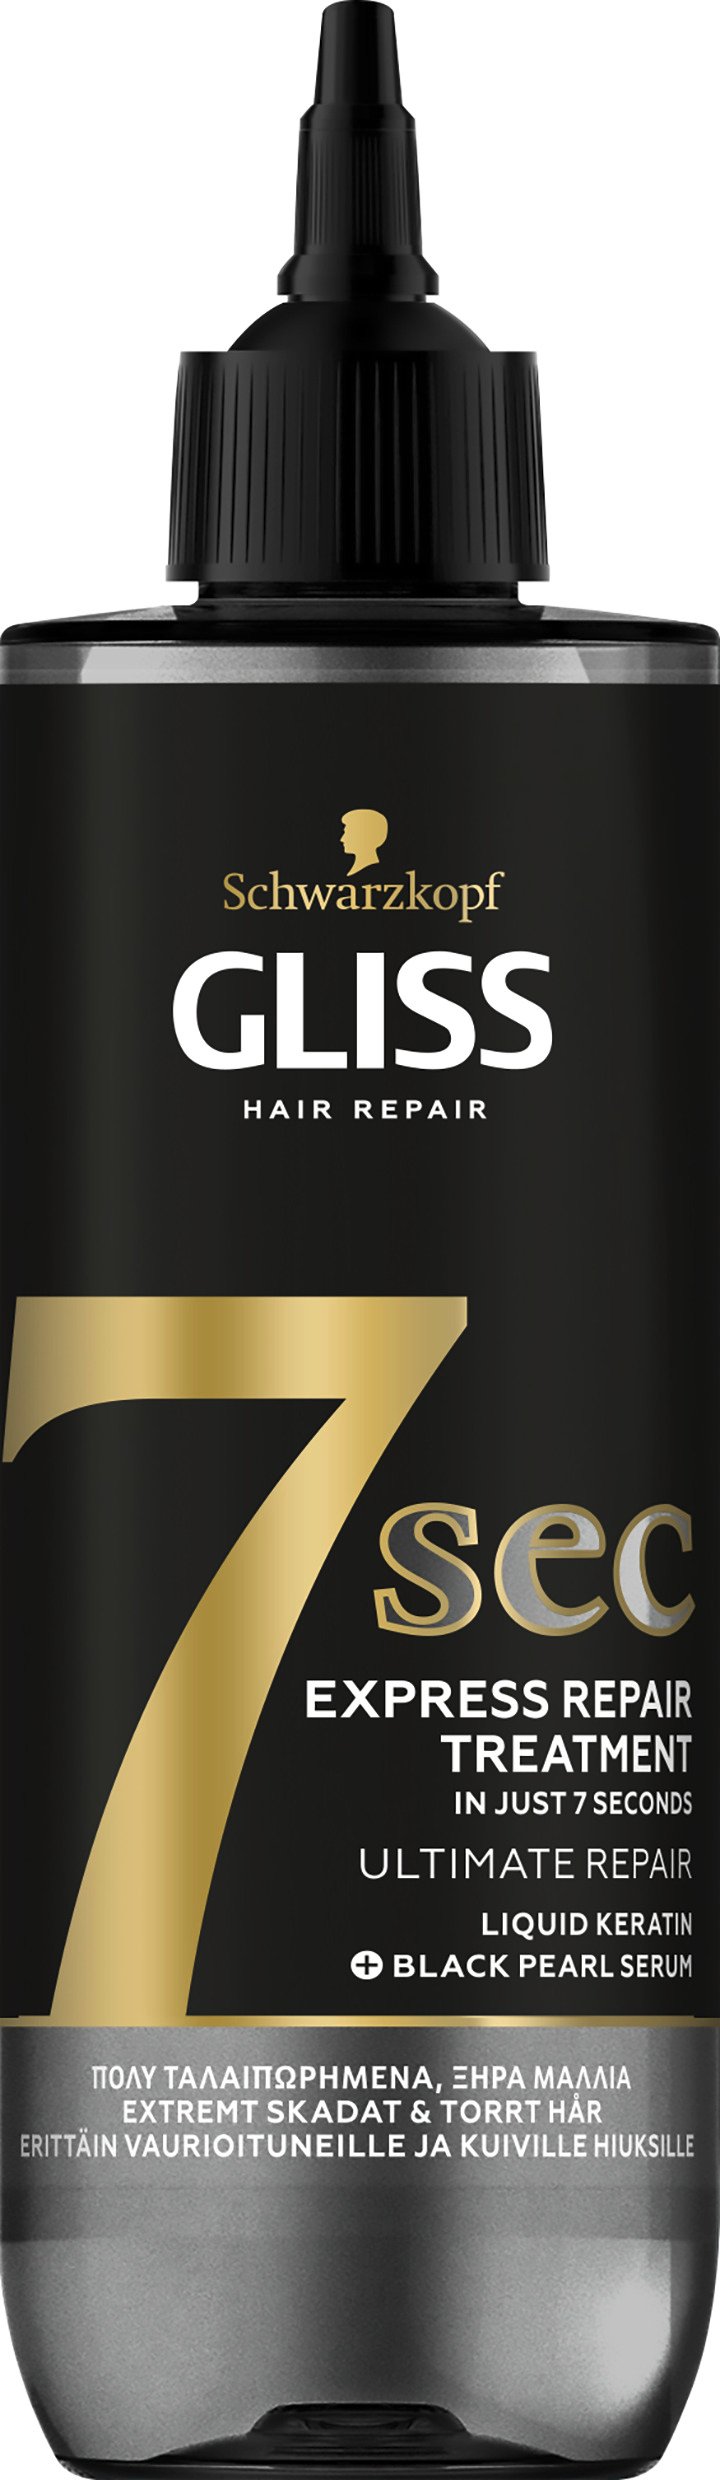 Schwarzkopf Gliss 7 Sec Express Repair Treatment 200 ml